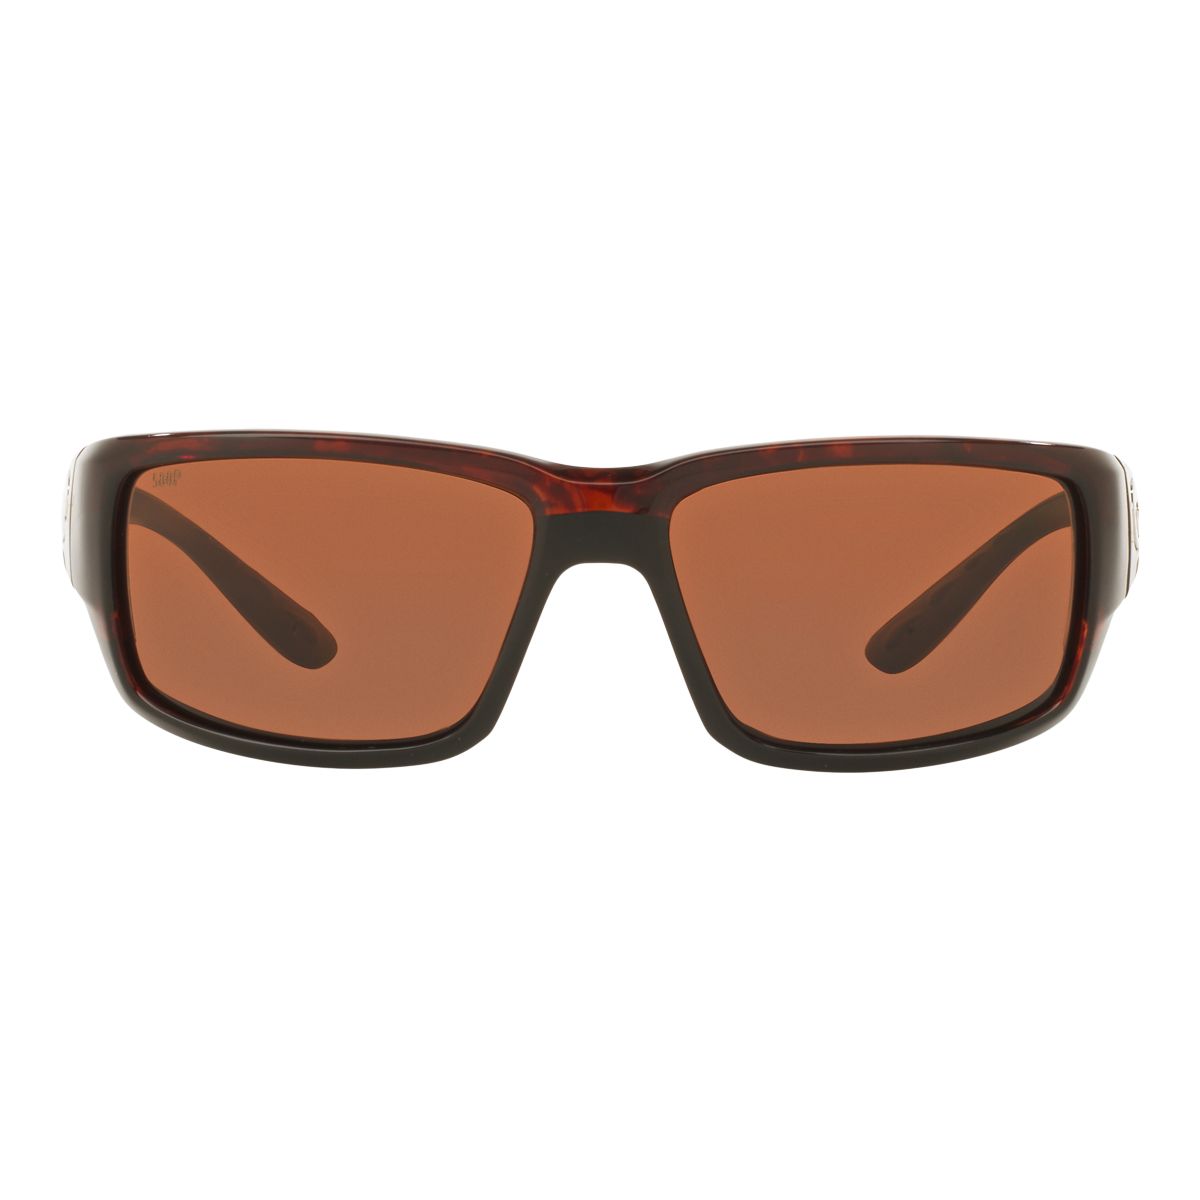 Image of Costa Men's/Women's Fantail Wrap Sunglasses Polarized